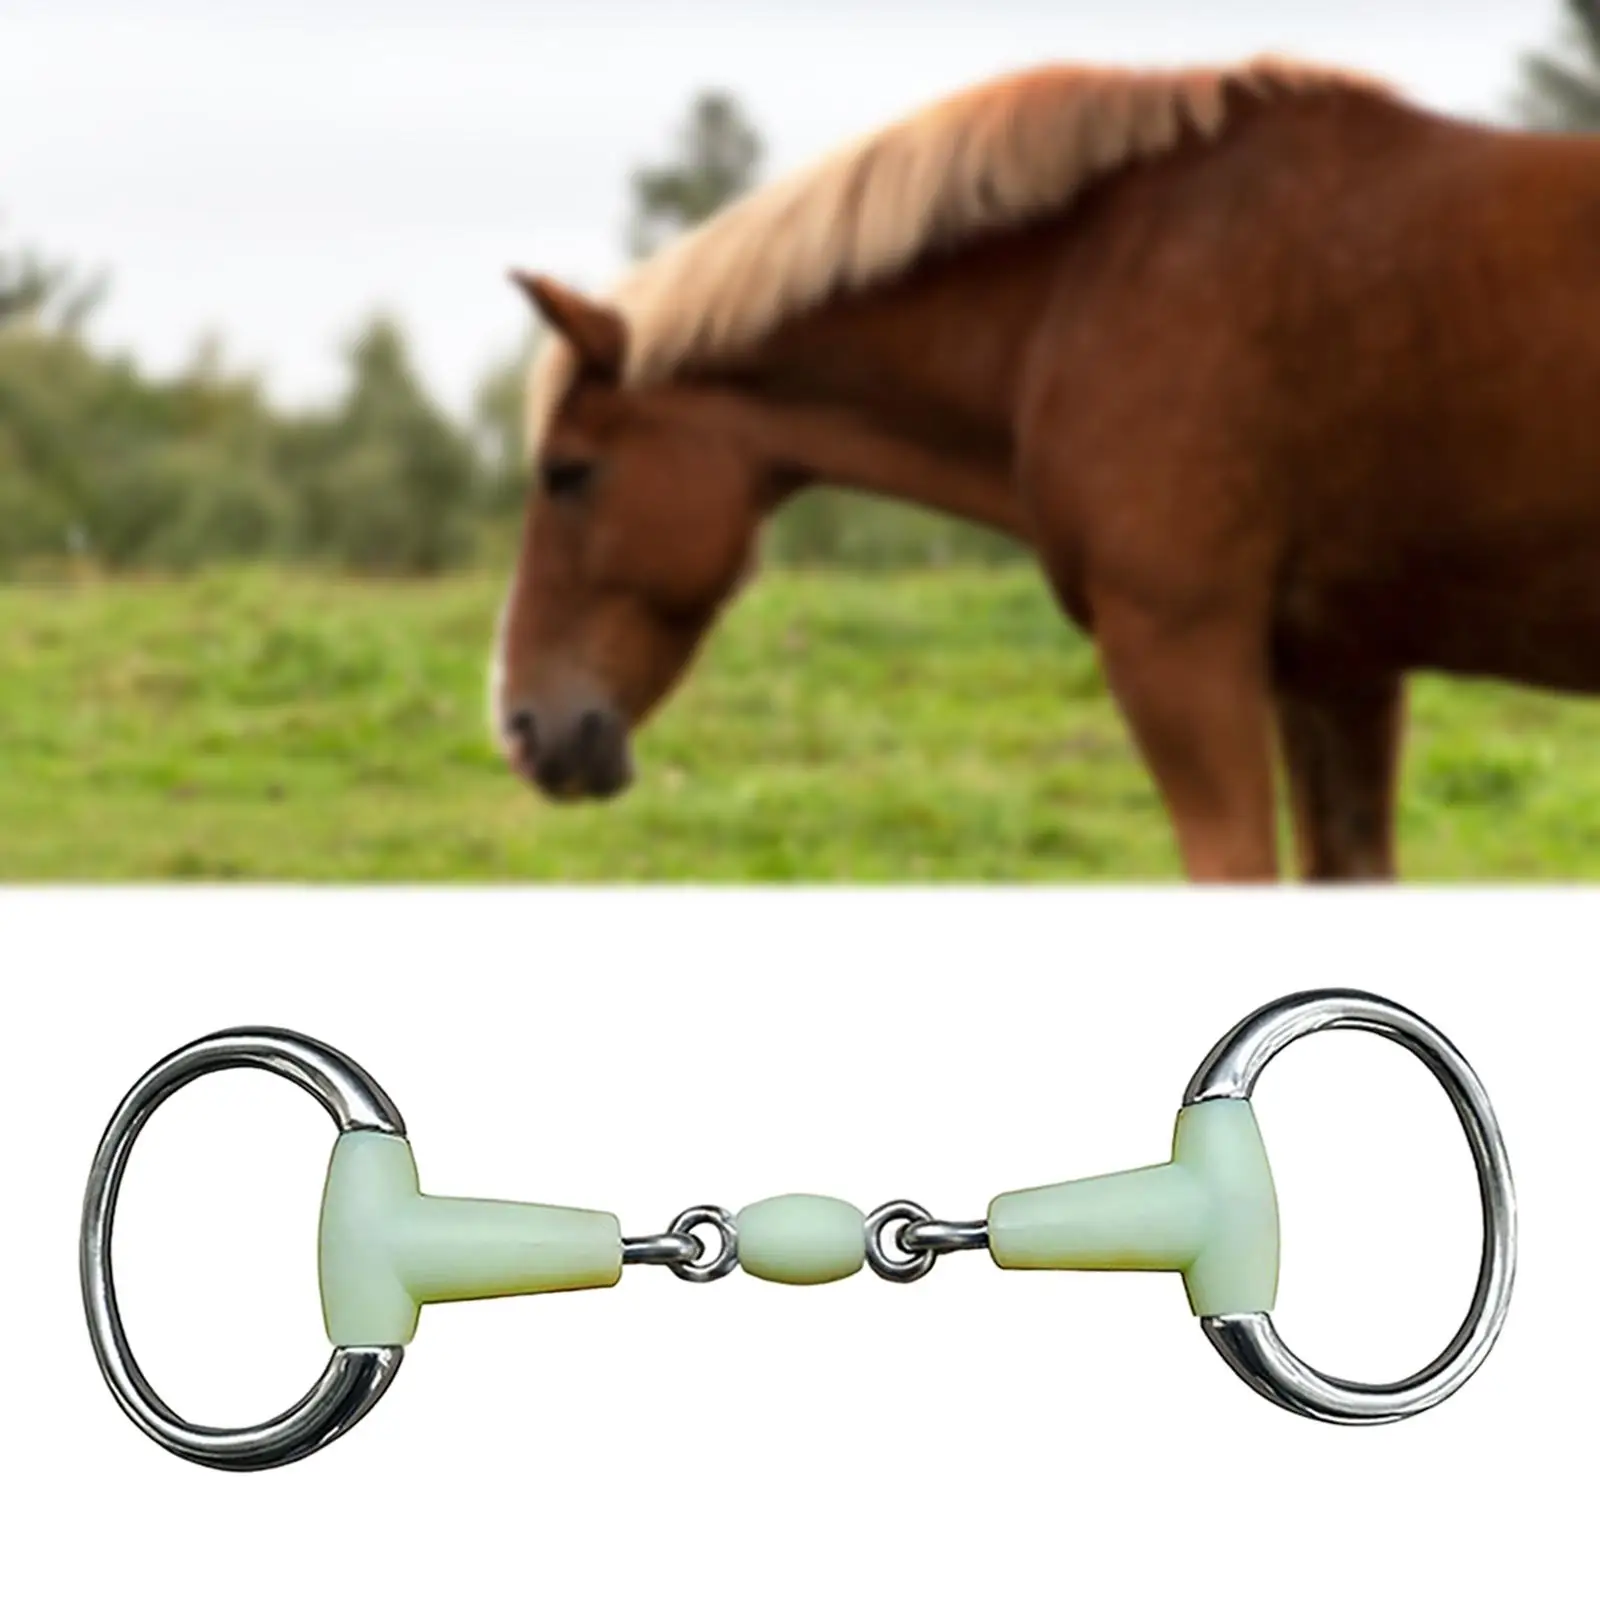 Ultralight Horse Ring Bit Horse Training Heavy Duty for Outdoor Horse Riding Equipment Draft Horses Mules Gear